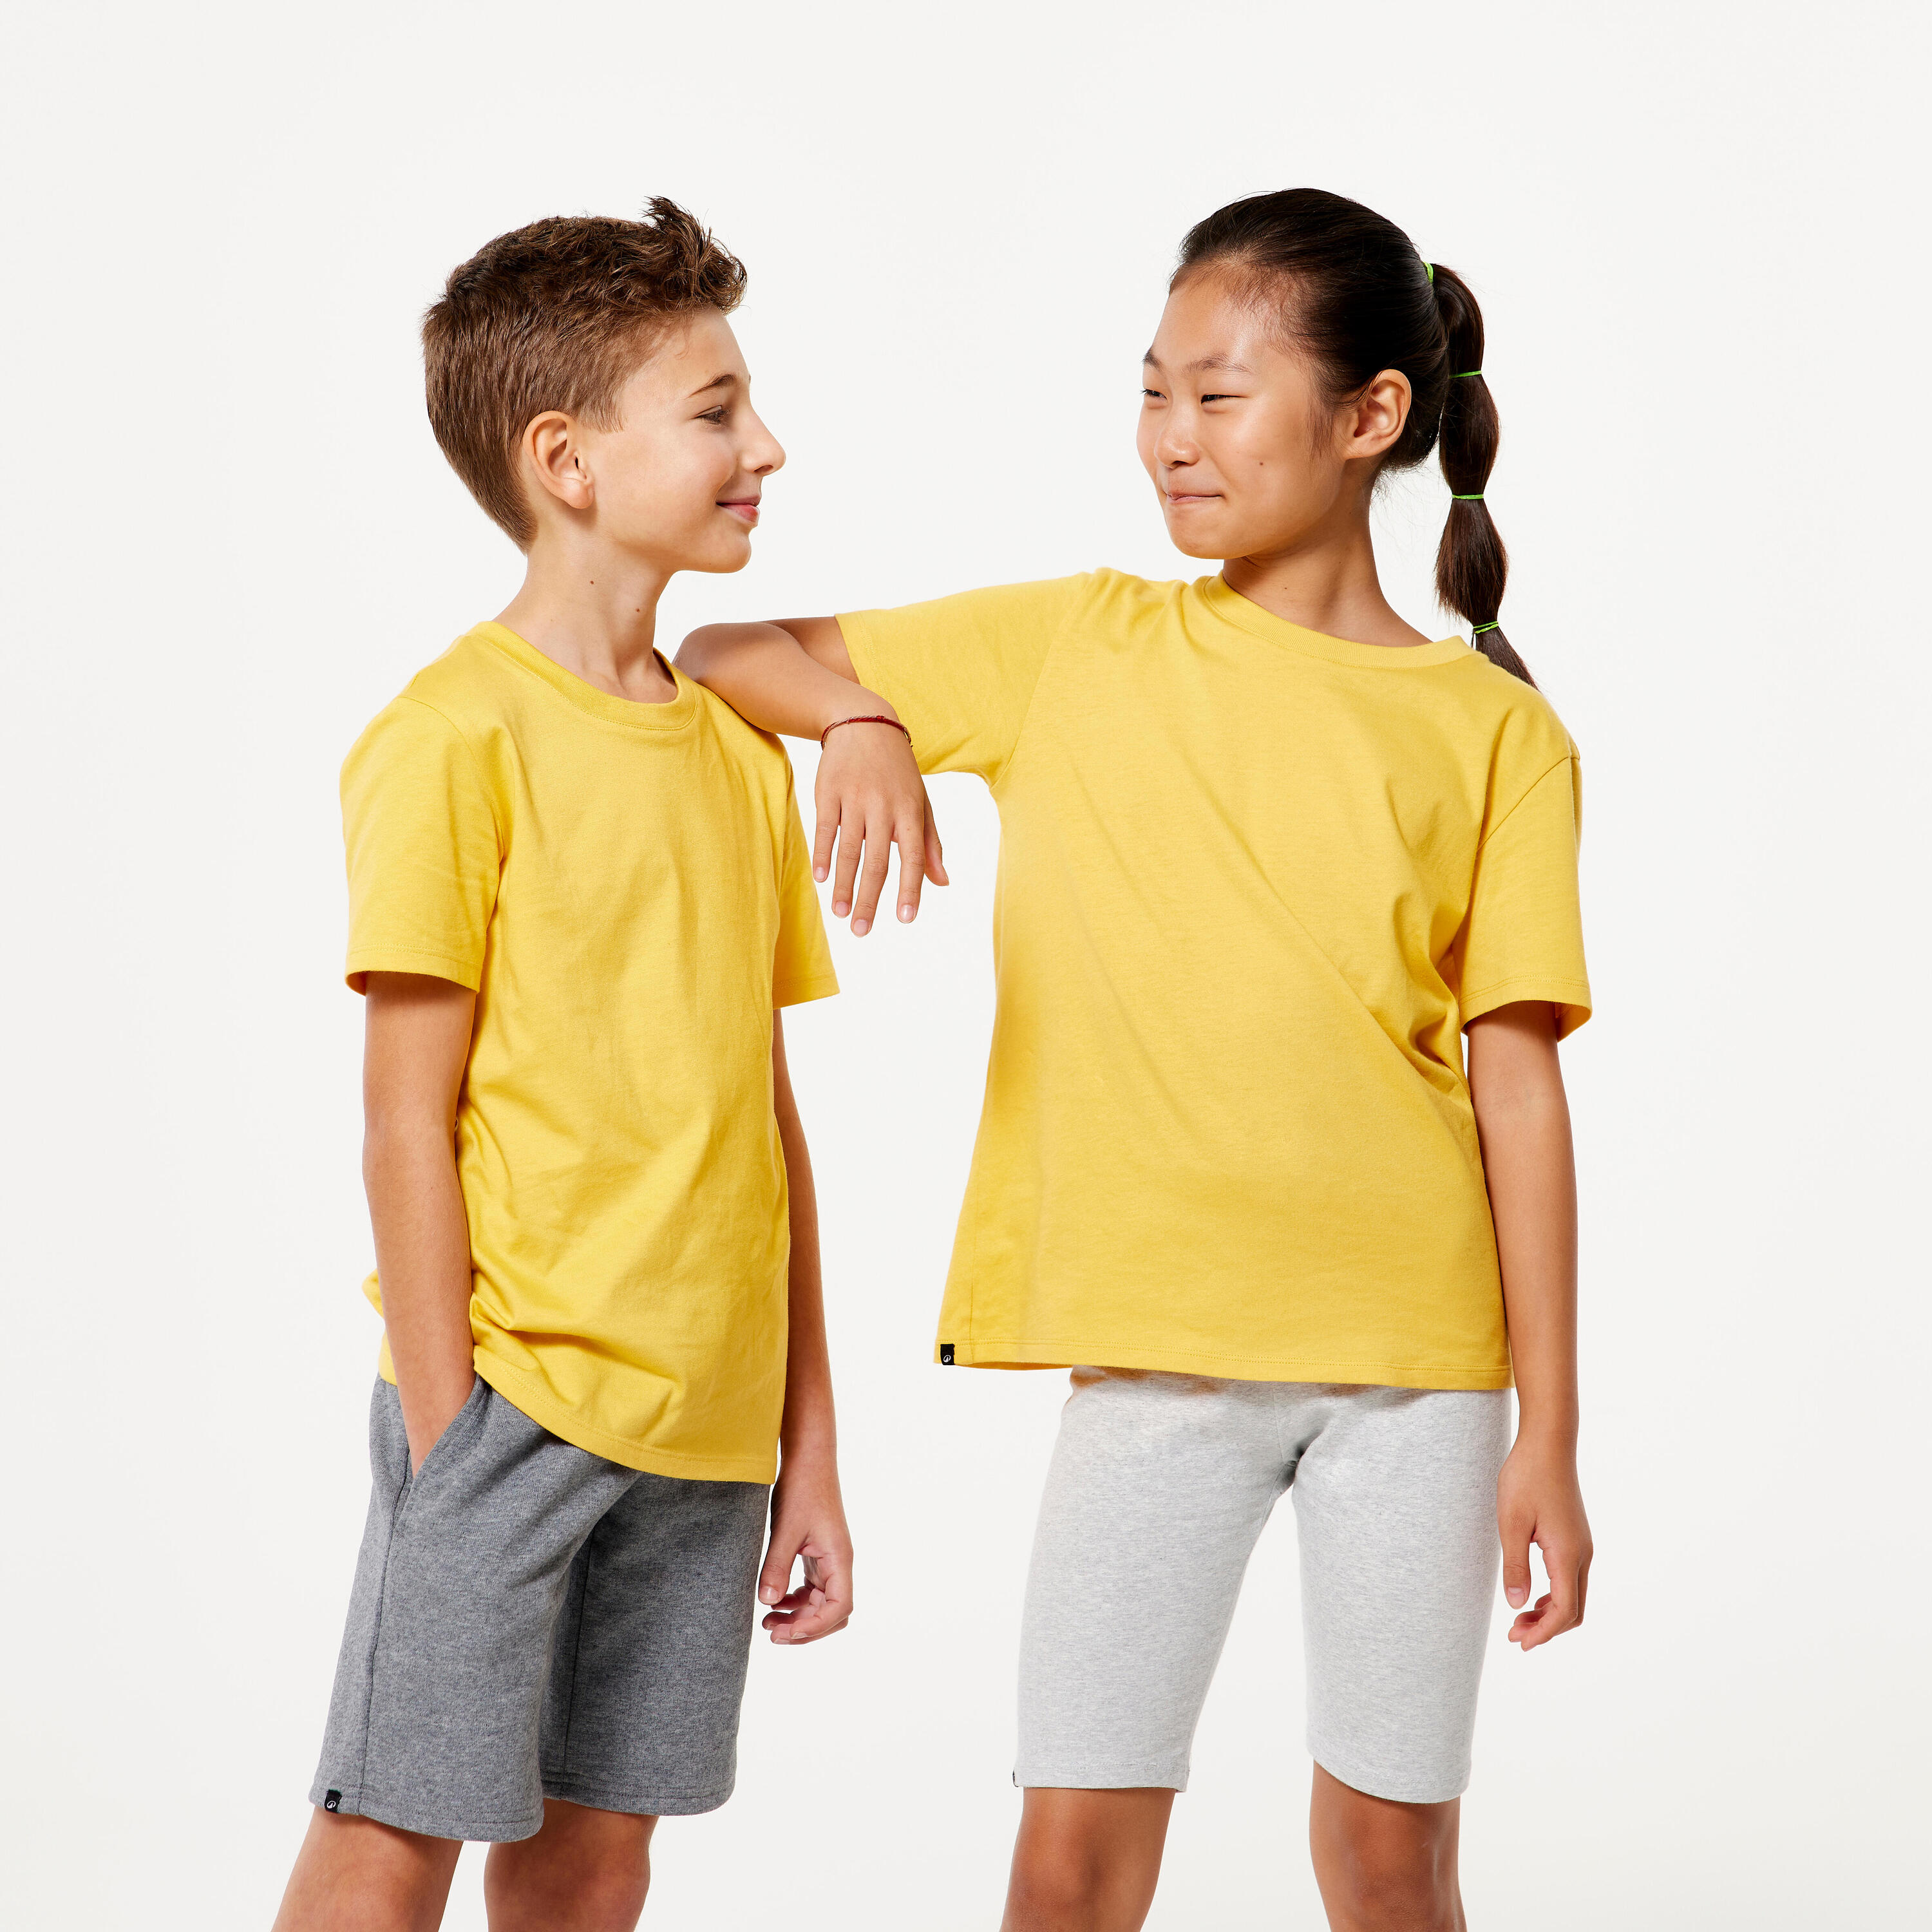 Kids' Unisex Cotton T-Shirt - Mustard 1/6